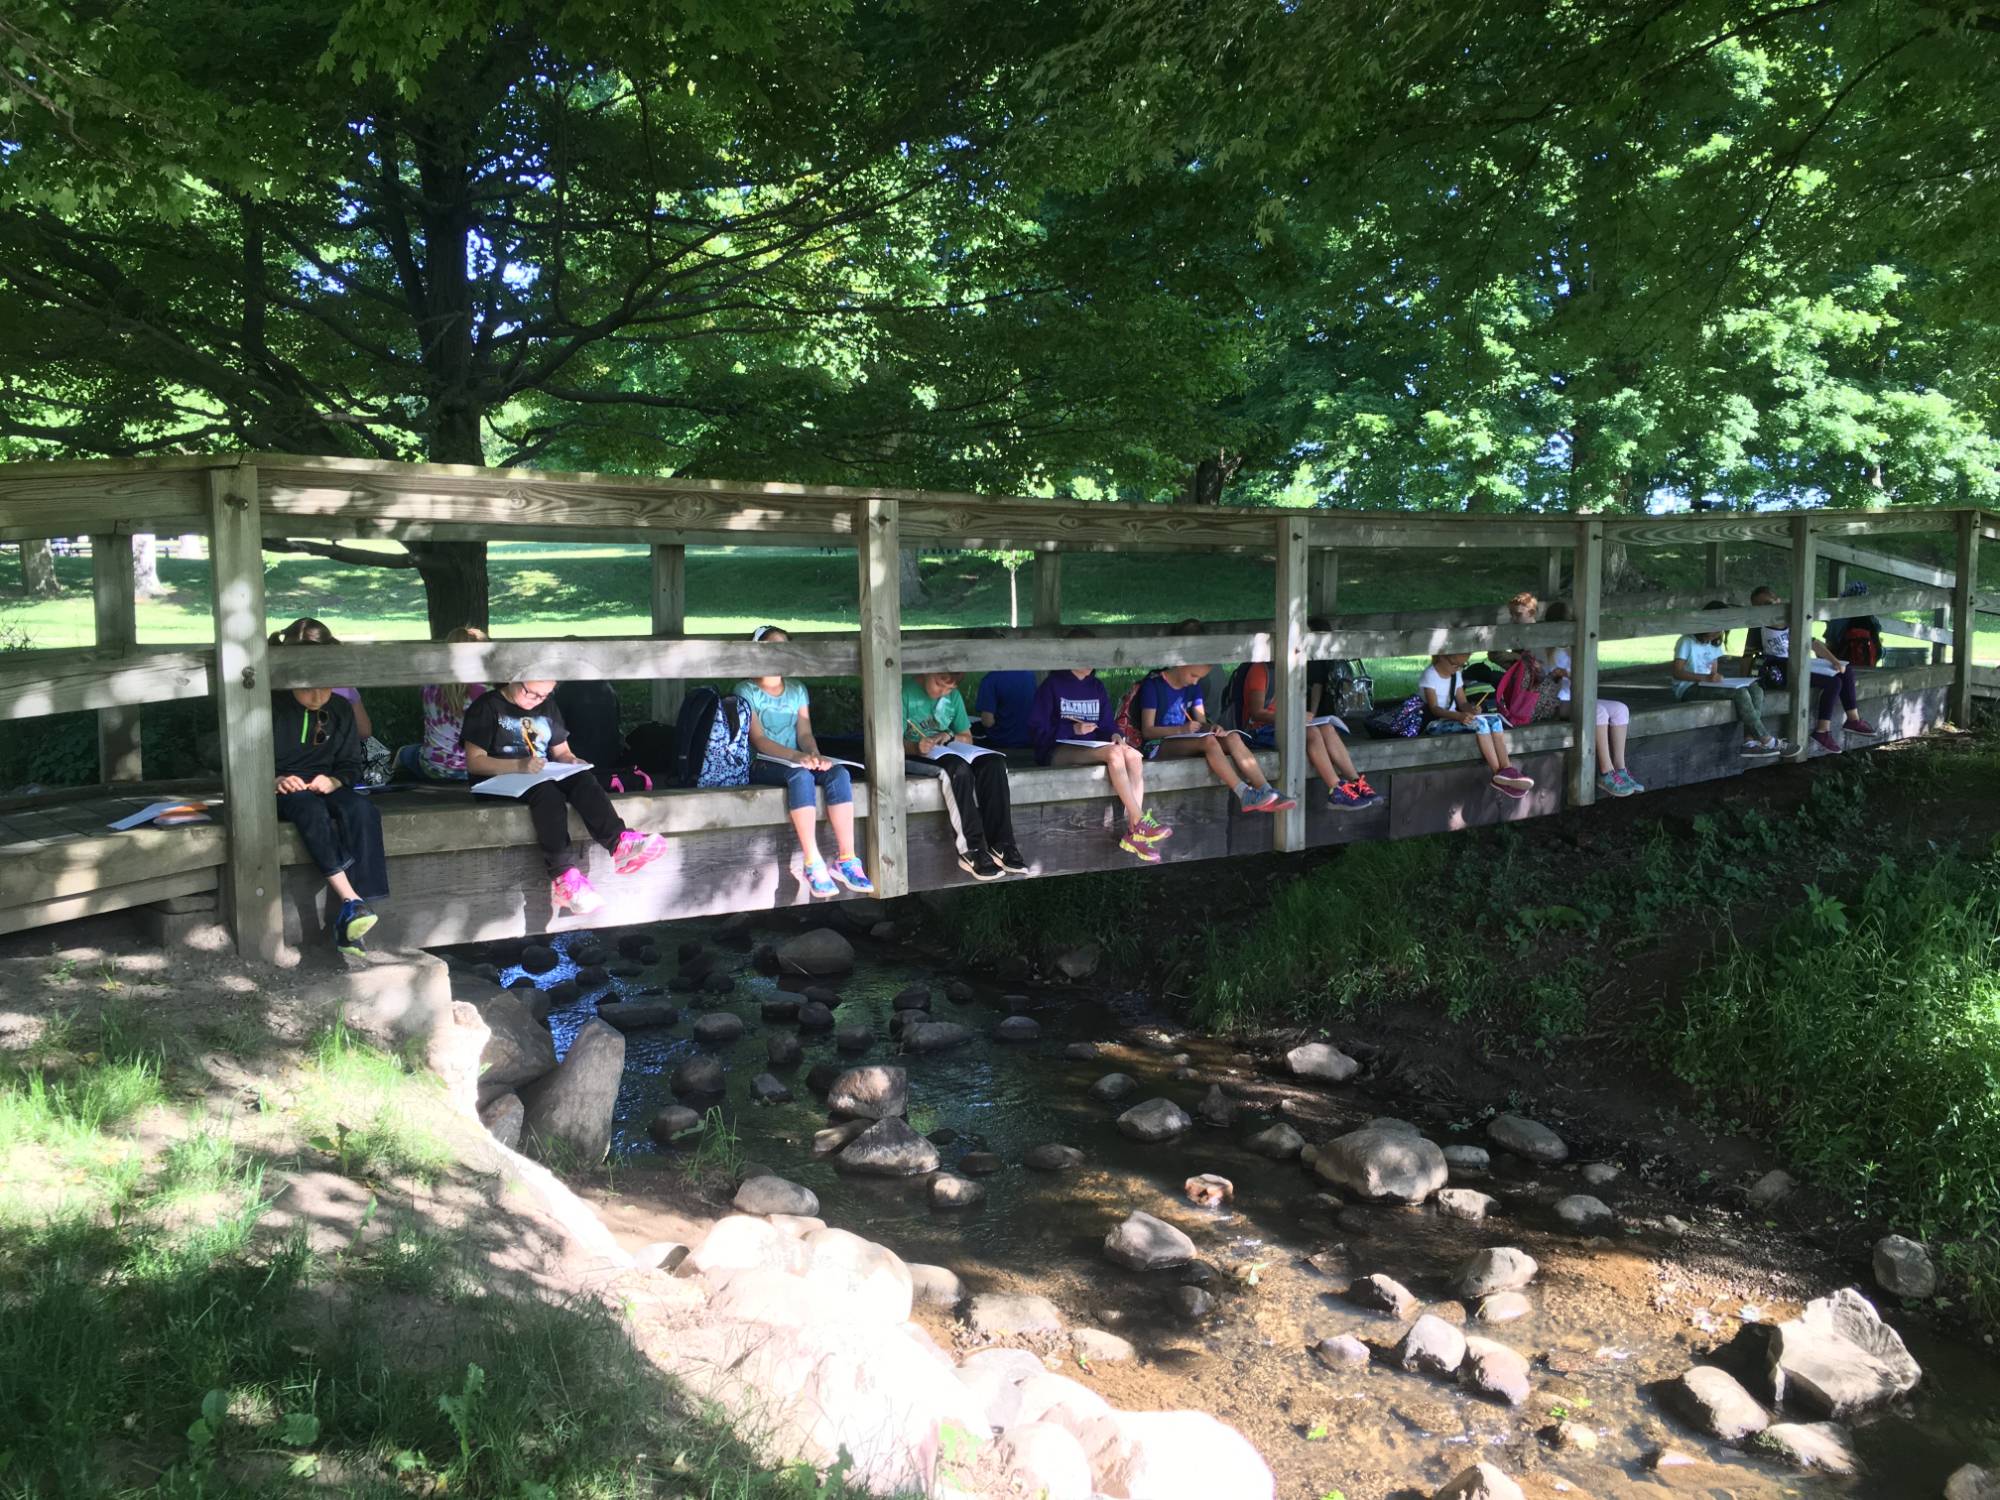 Students sit on bridge above stream